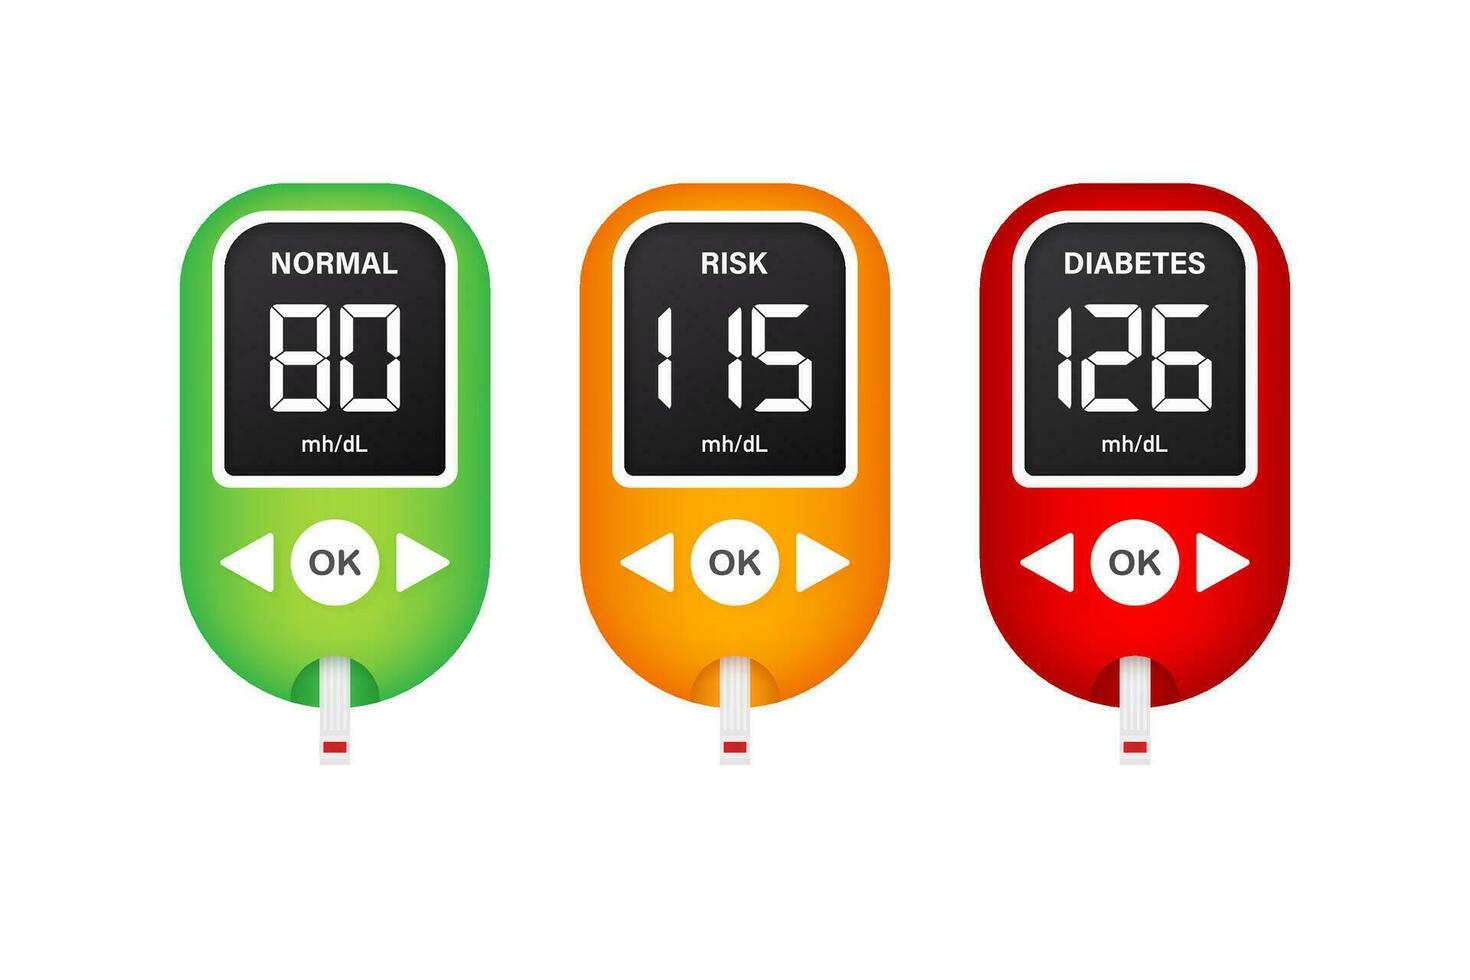 bloed glucose meter niveau testen. diabetes glucosemeter. abstract concept grafisch web banier element. vector illustratie